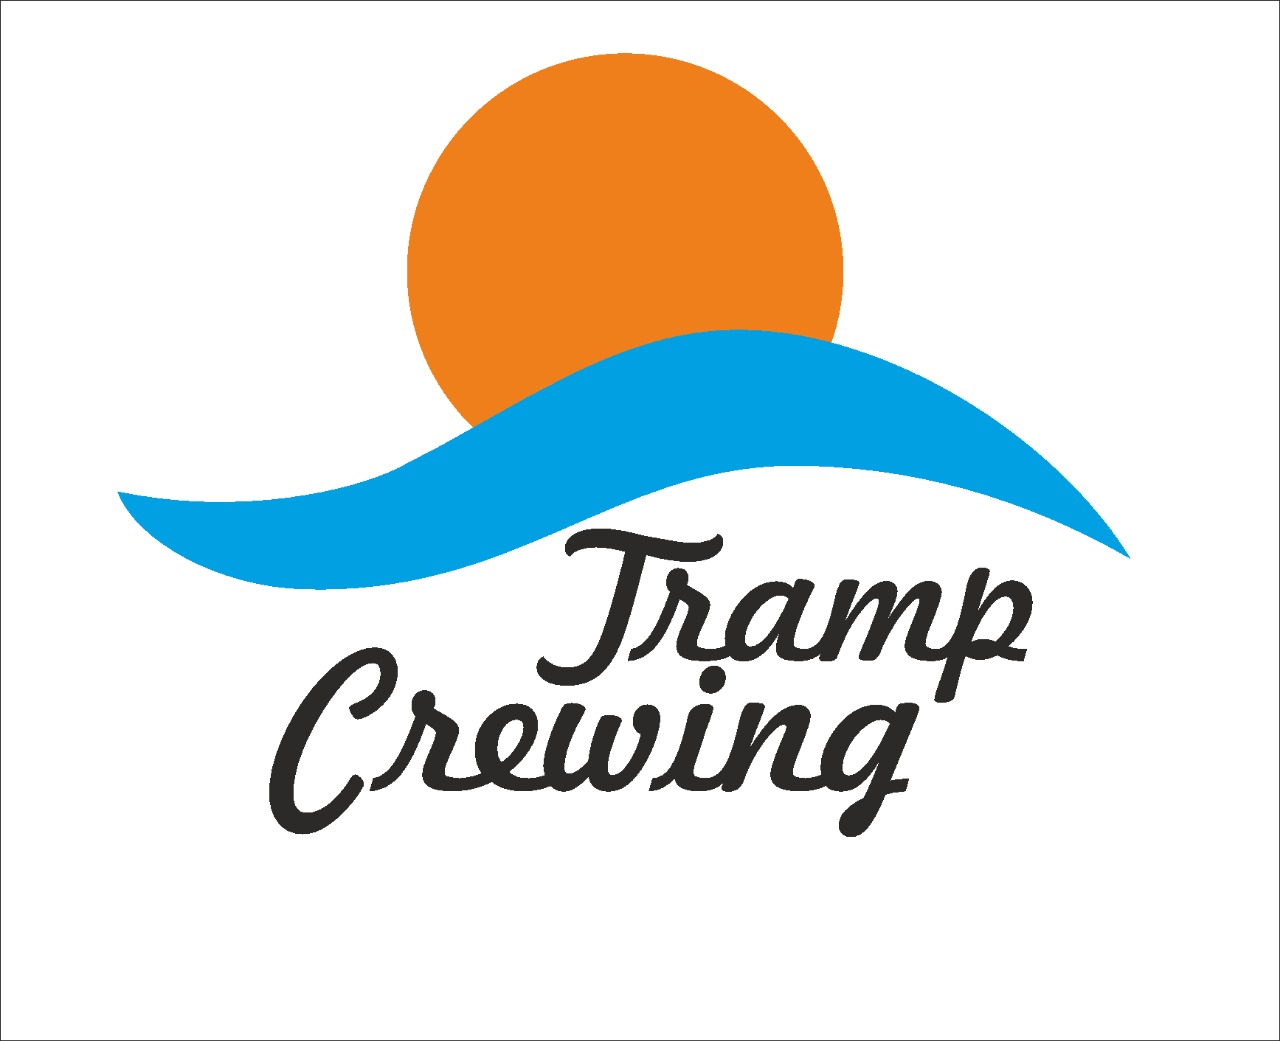 Maritime Agency “Tramp Crewing”